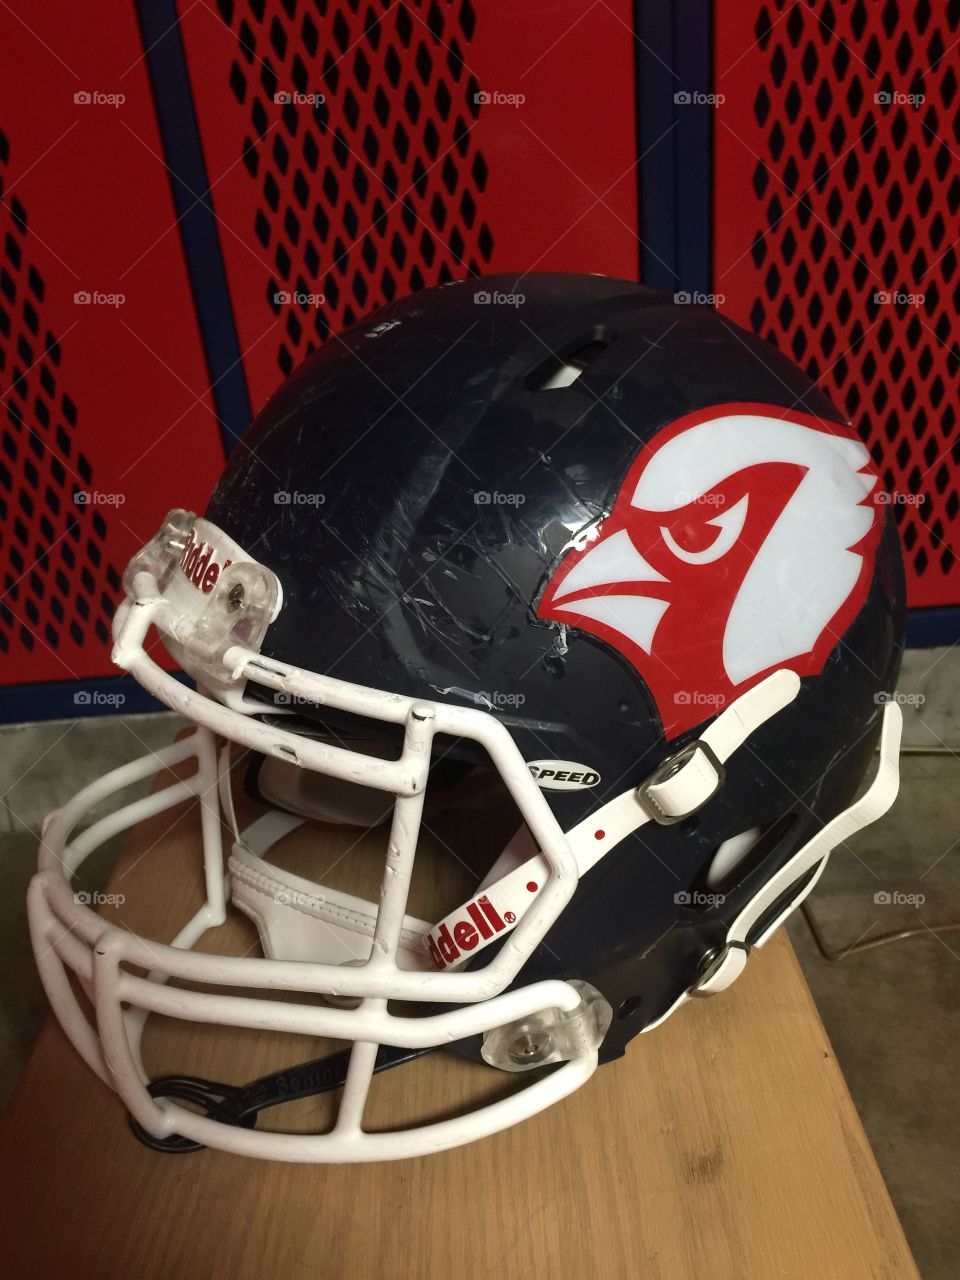 Helmet after season